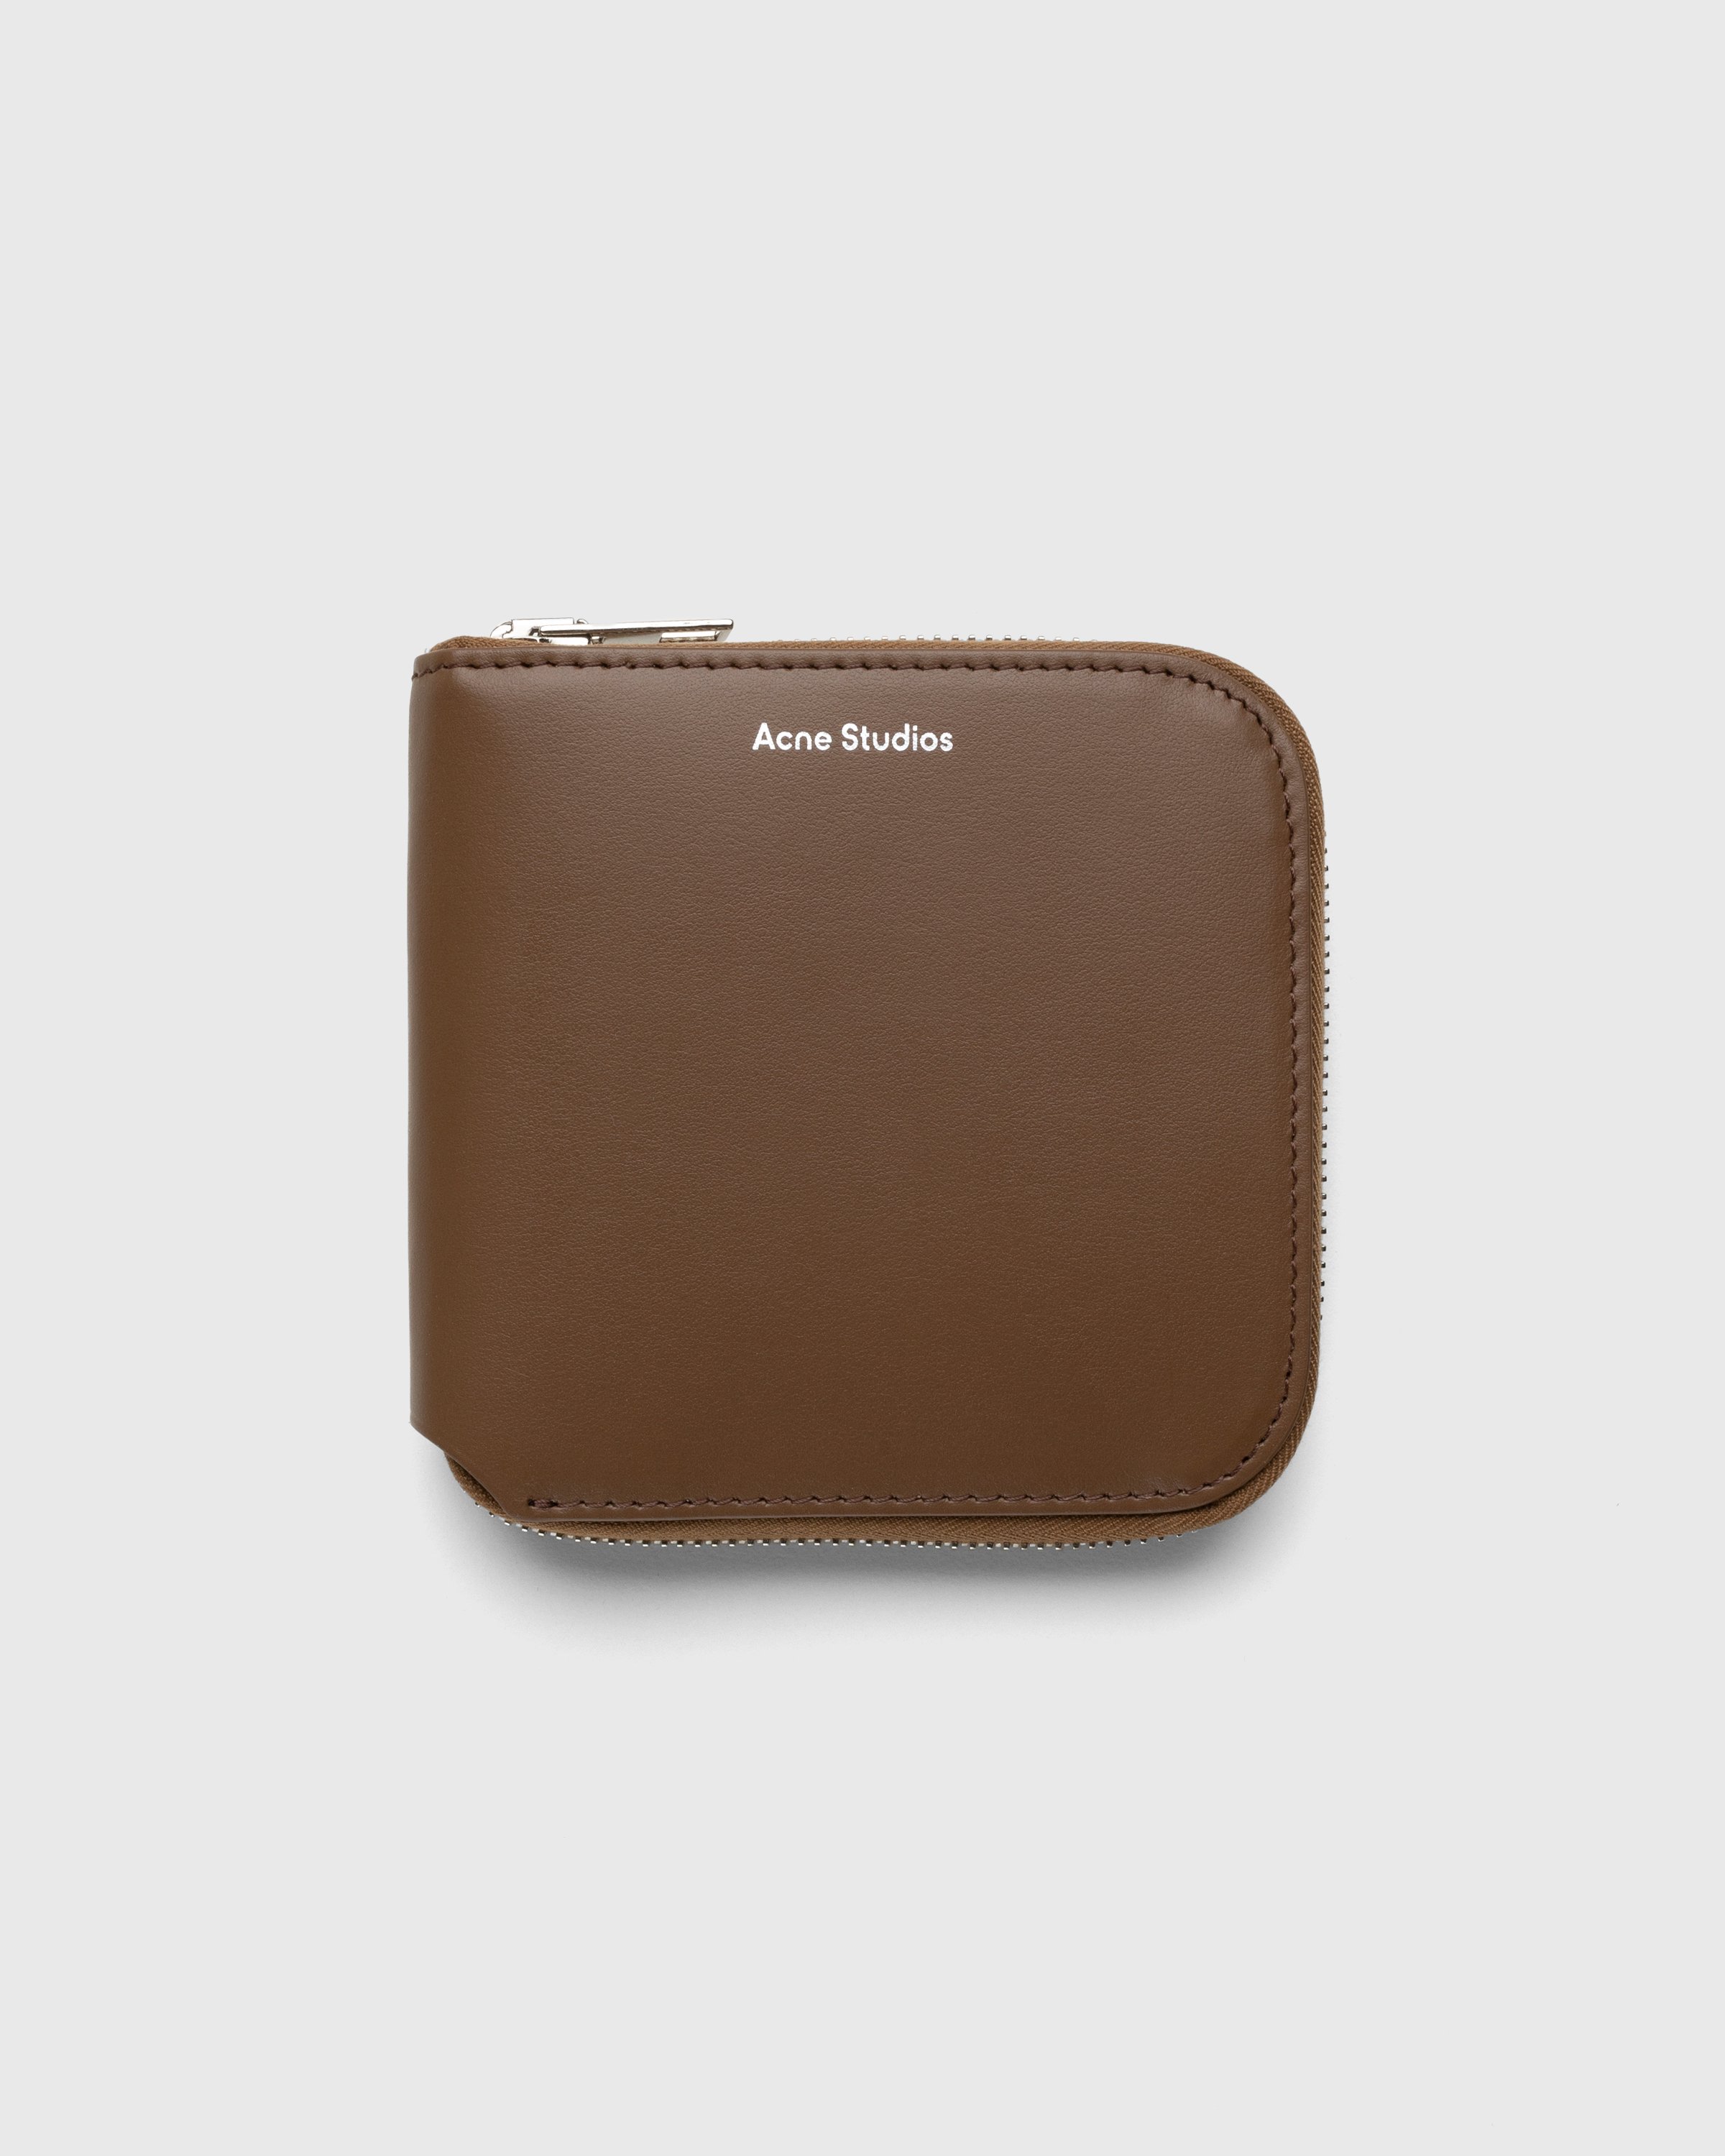 Acne Studios - Leather Zip Wallet Brown - Accessories - Brown - Image 1